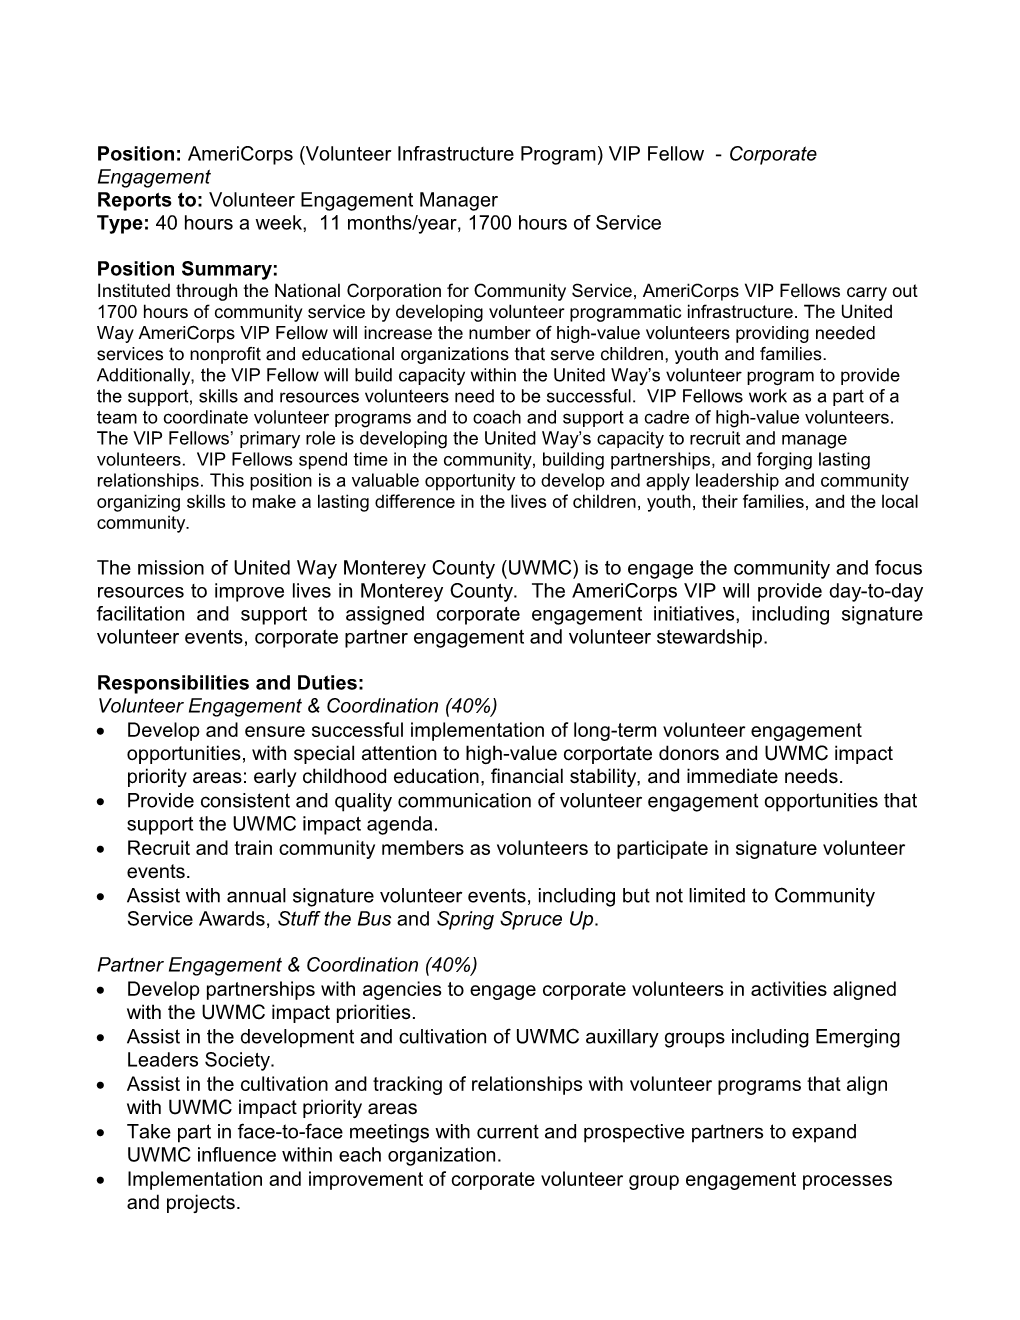 Position: Americorps (Volunteer Infrastructure Program) VIP Fellow - Corporate Engagement